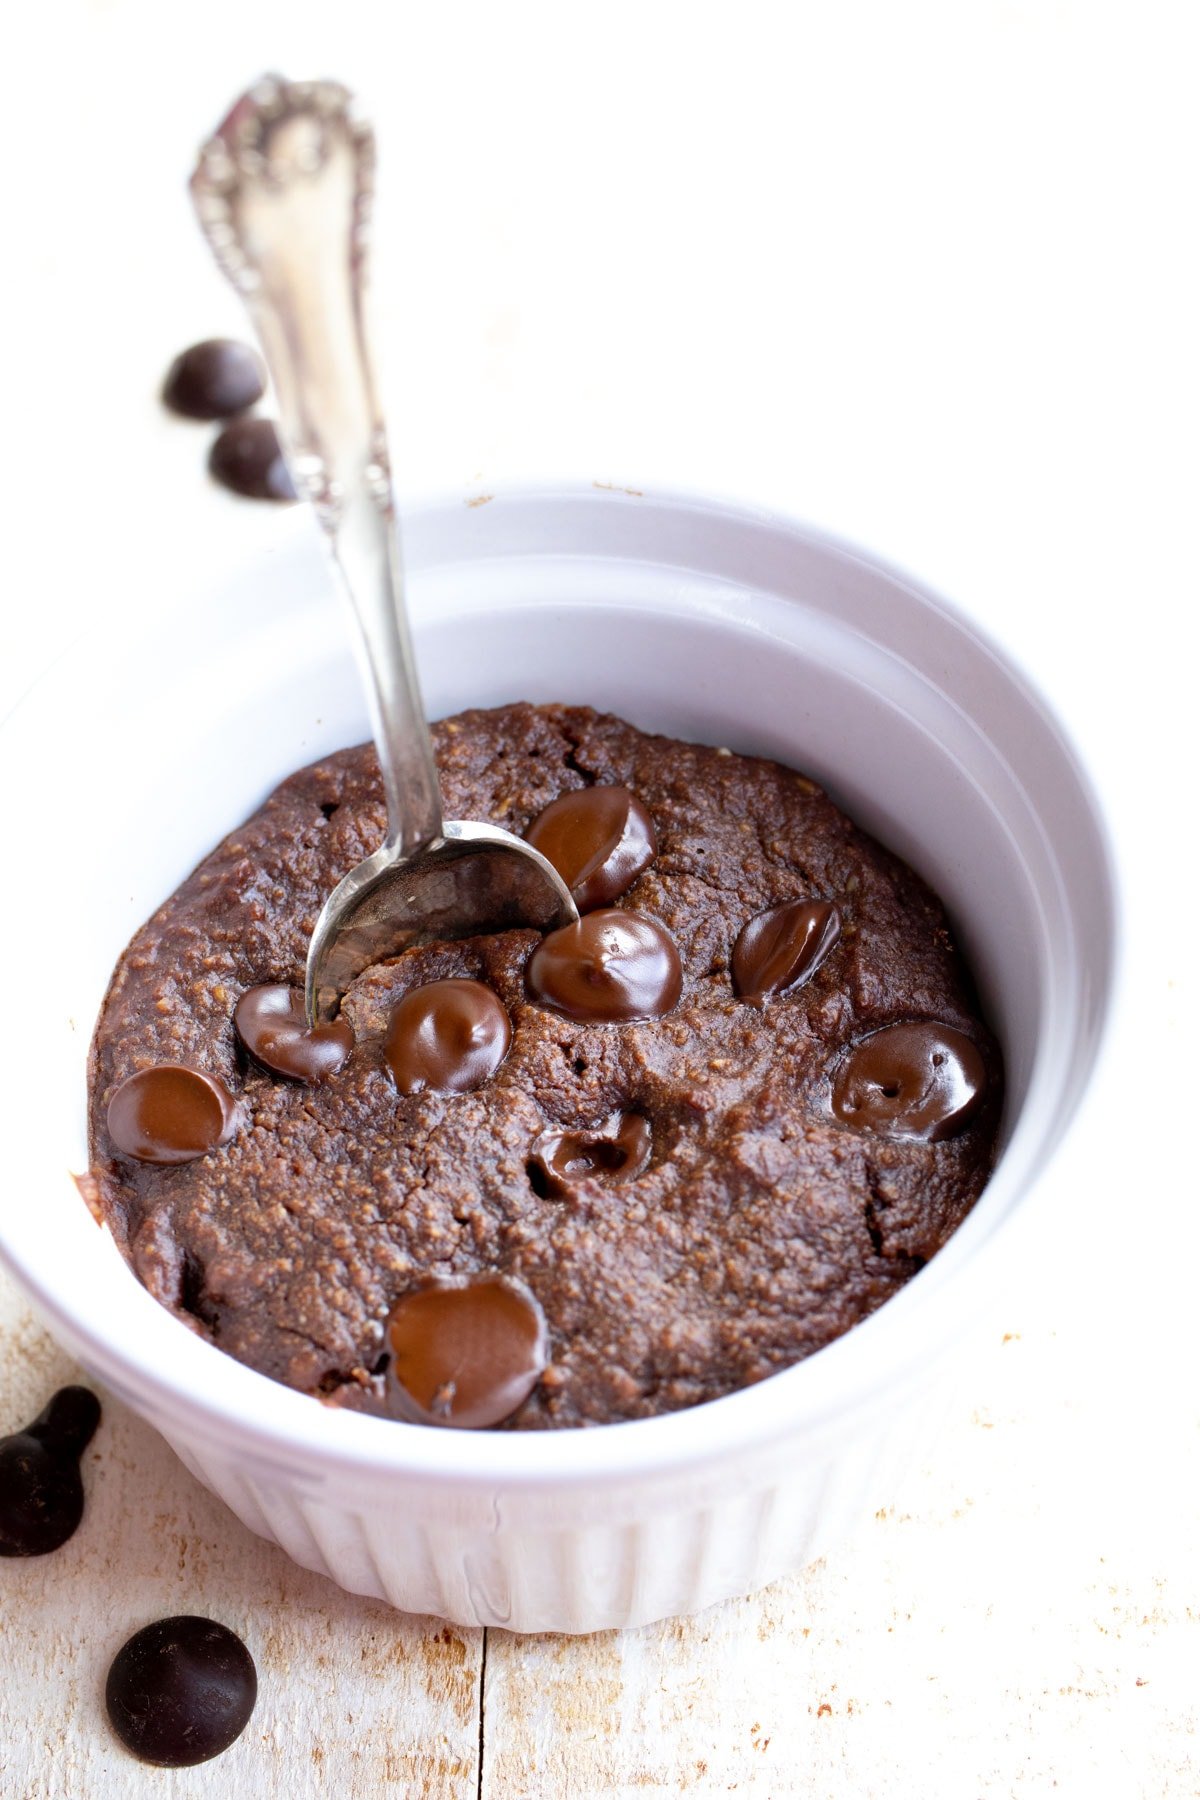 a chocolate chip mug brownie in a ramekin with a spoon